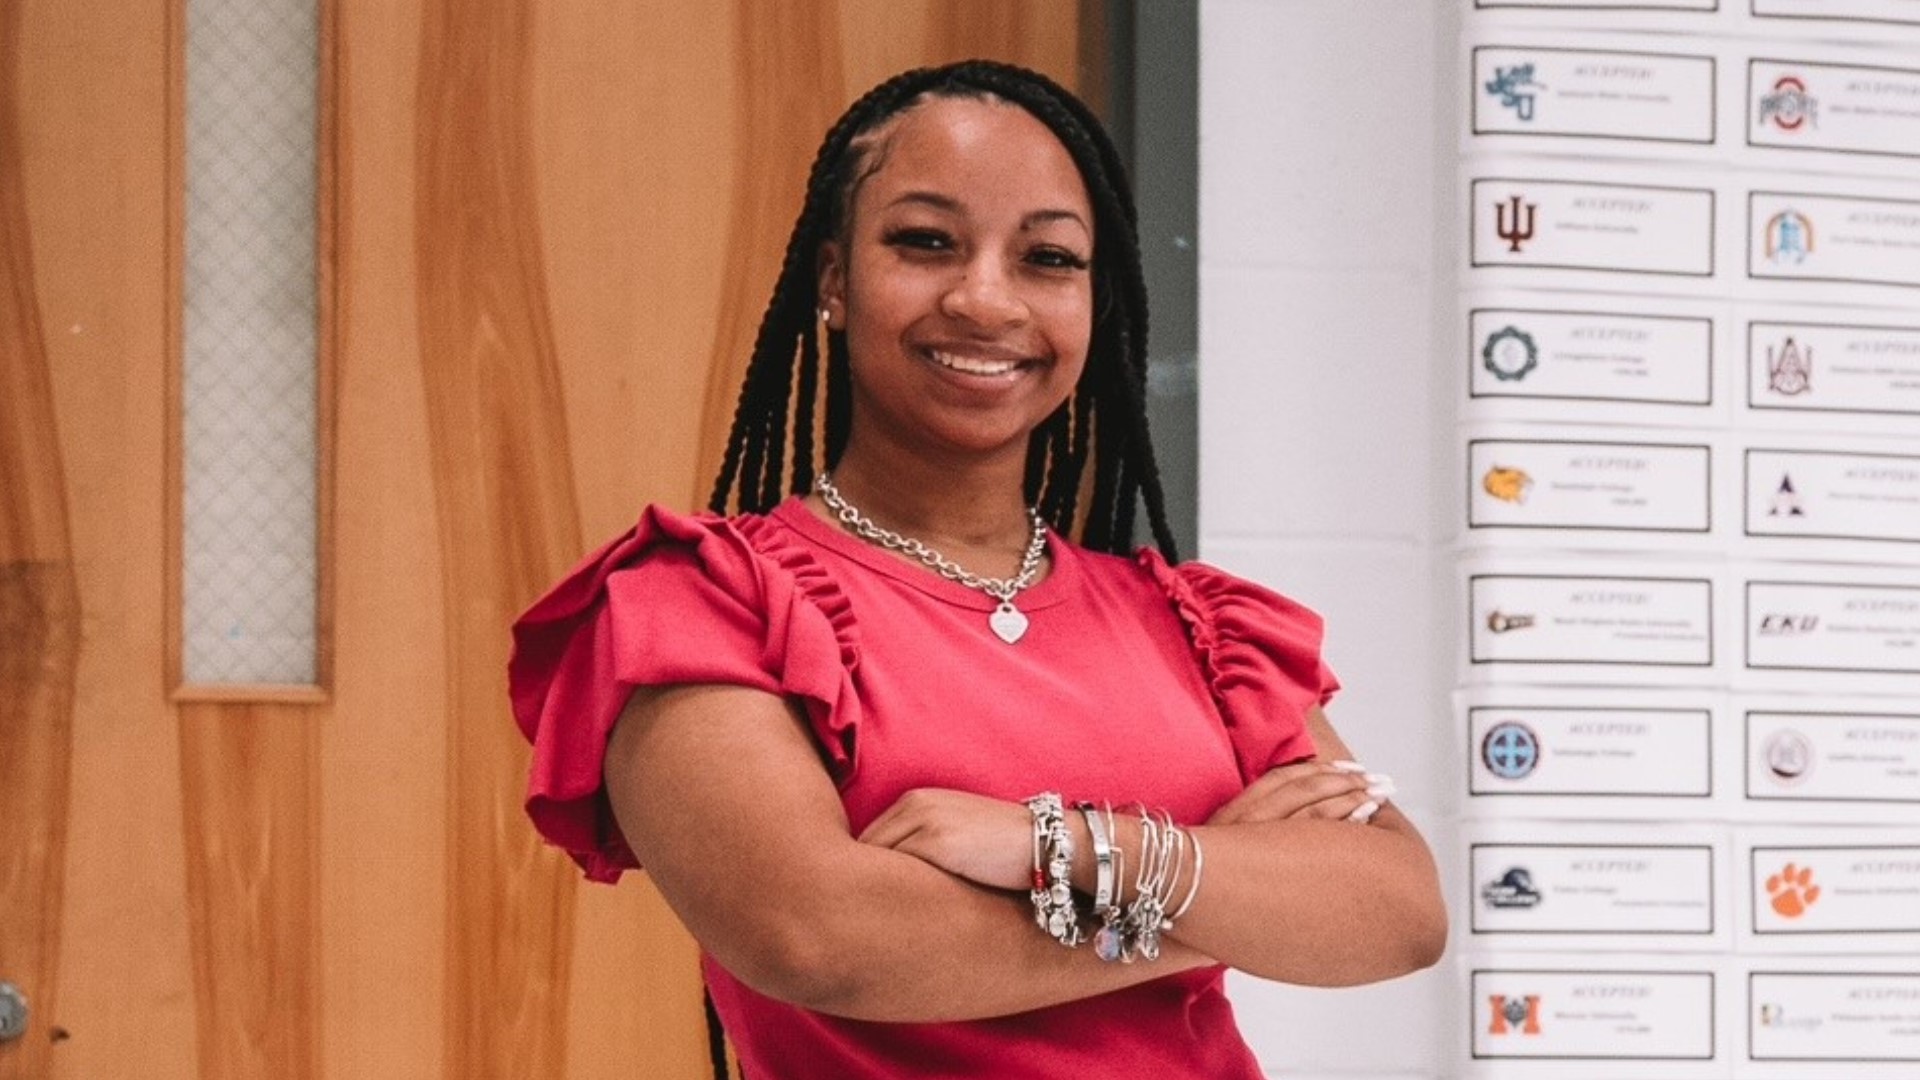 Makenzie Thompson said she has decided to study animal science Tuskegee University.